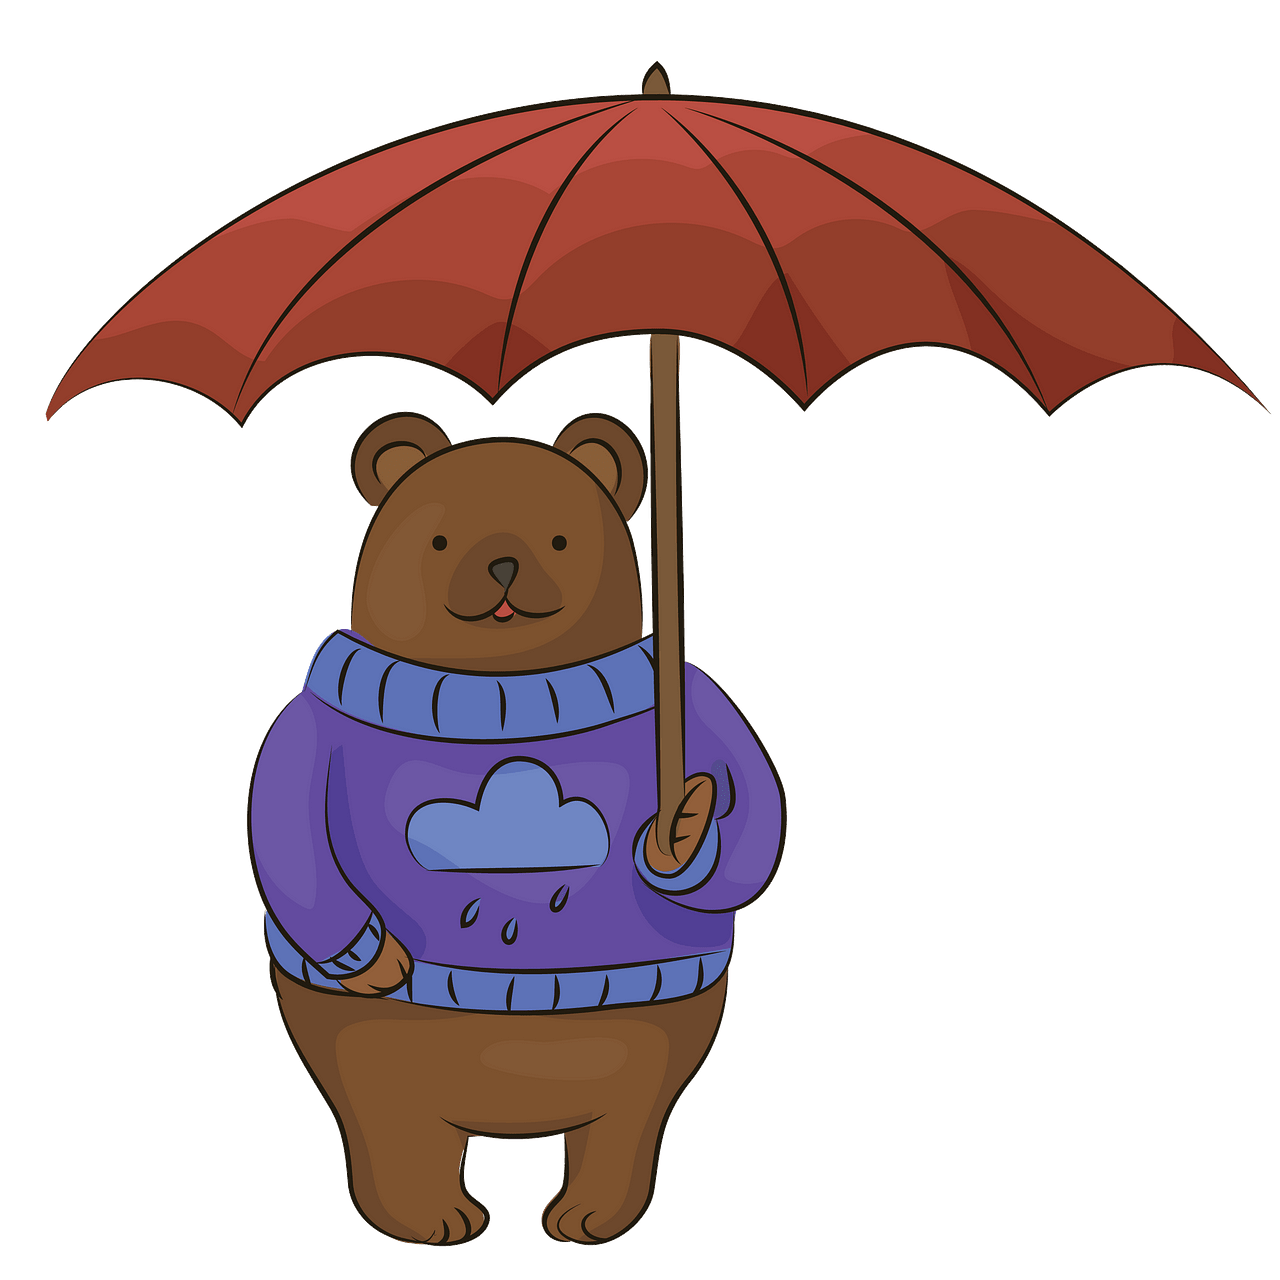 Bear with umbrella.